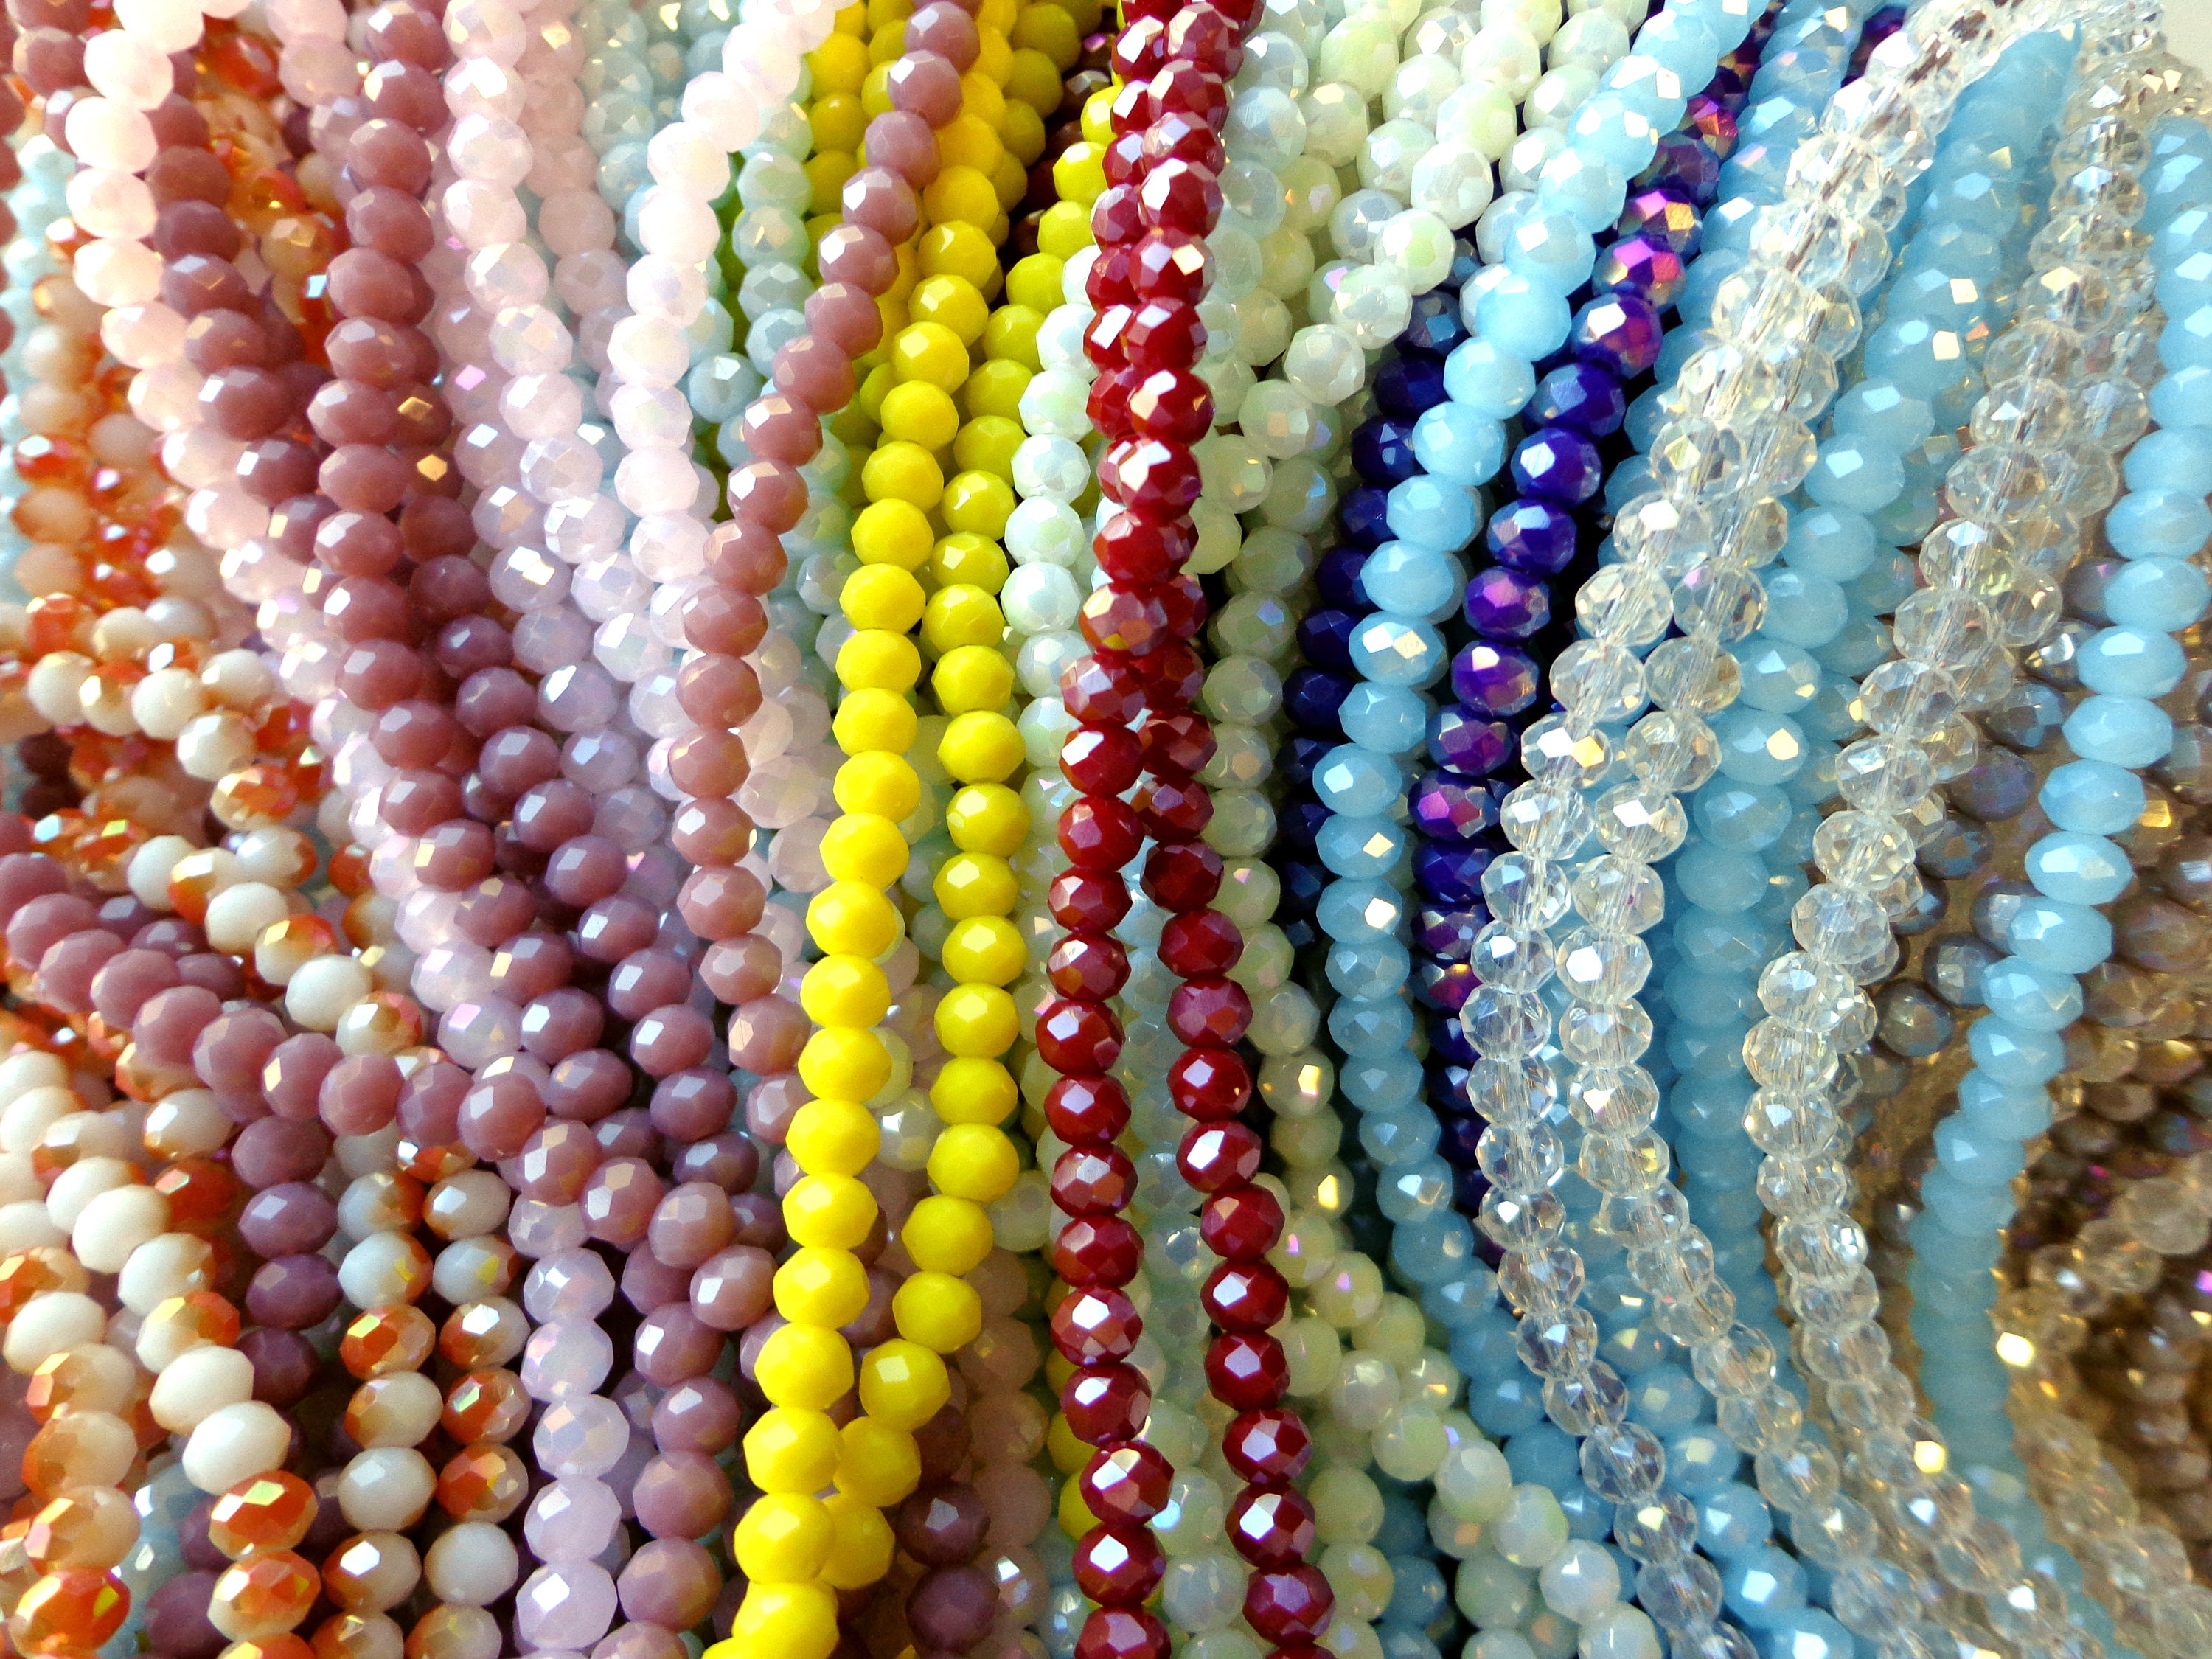 5pcs Oval Beads Semi-Precious Gemstones Quartz Crystal Charms DIY Beads Random Color Bulk for Jewelry Making (Mixed Color), Multicolor